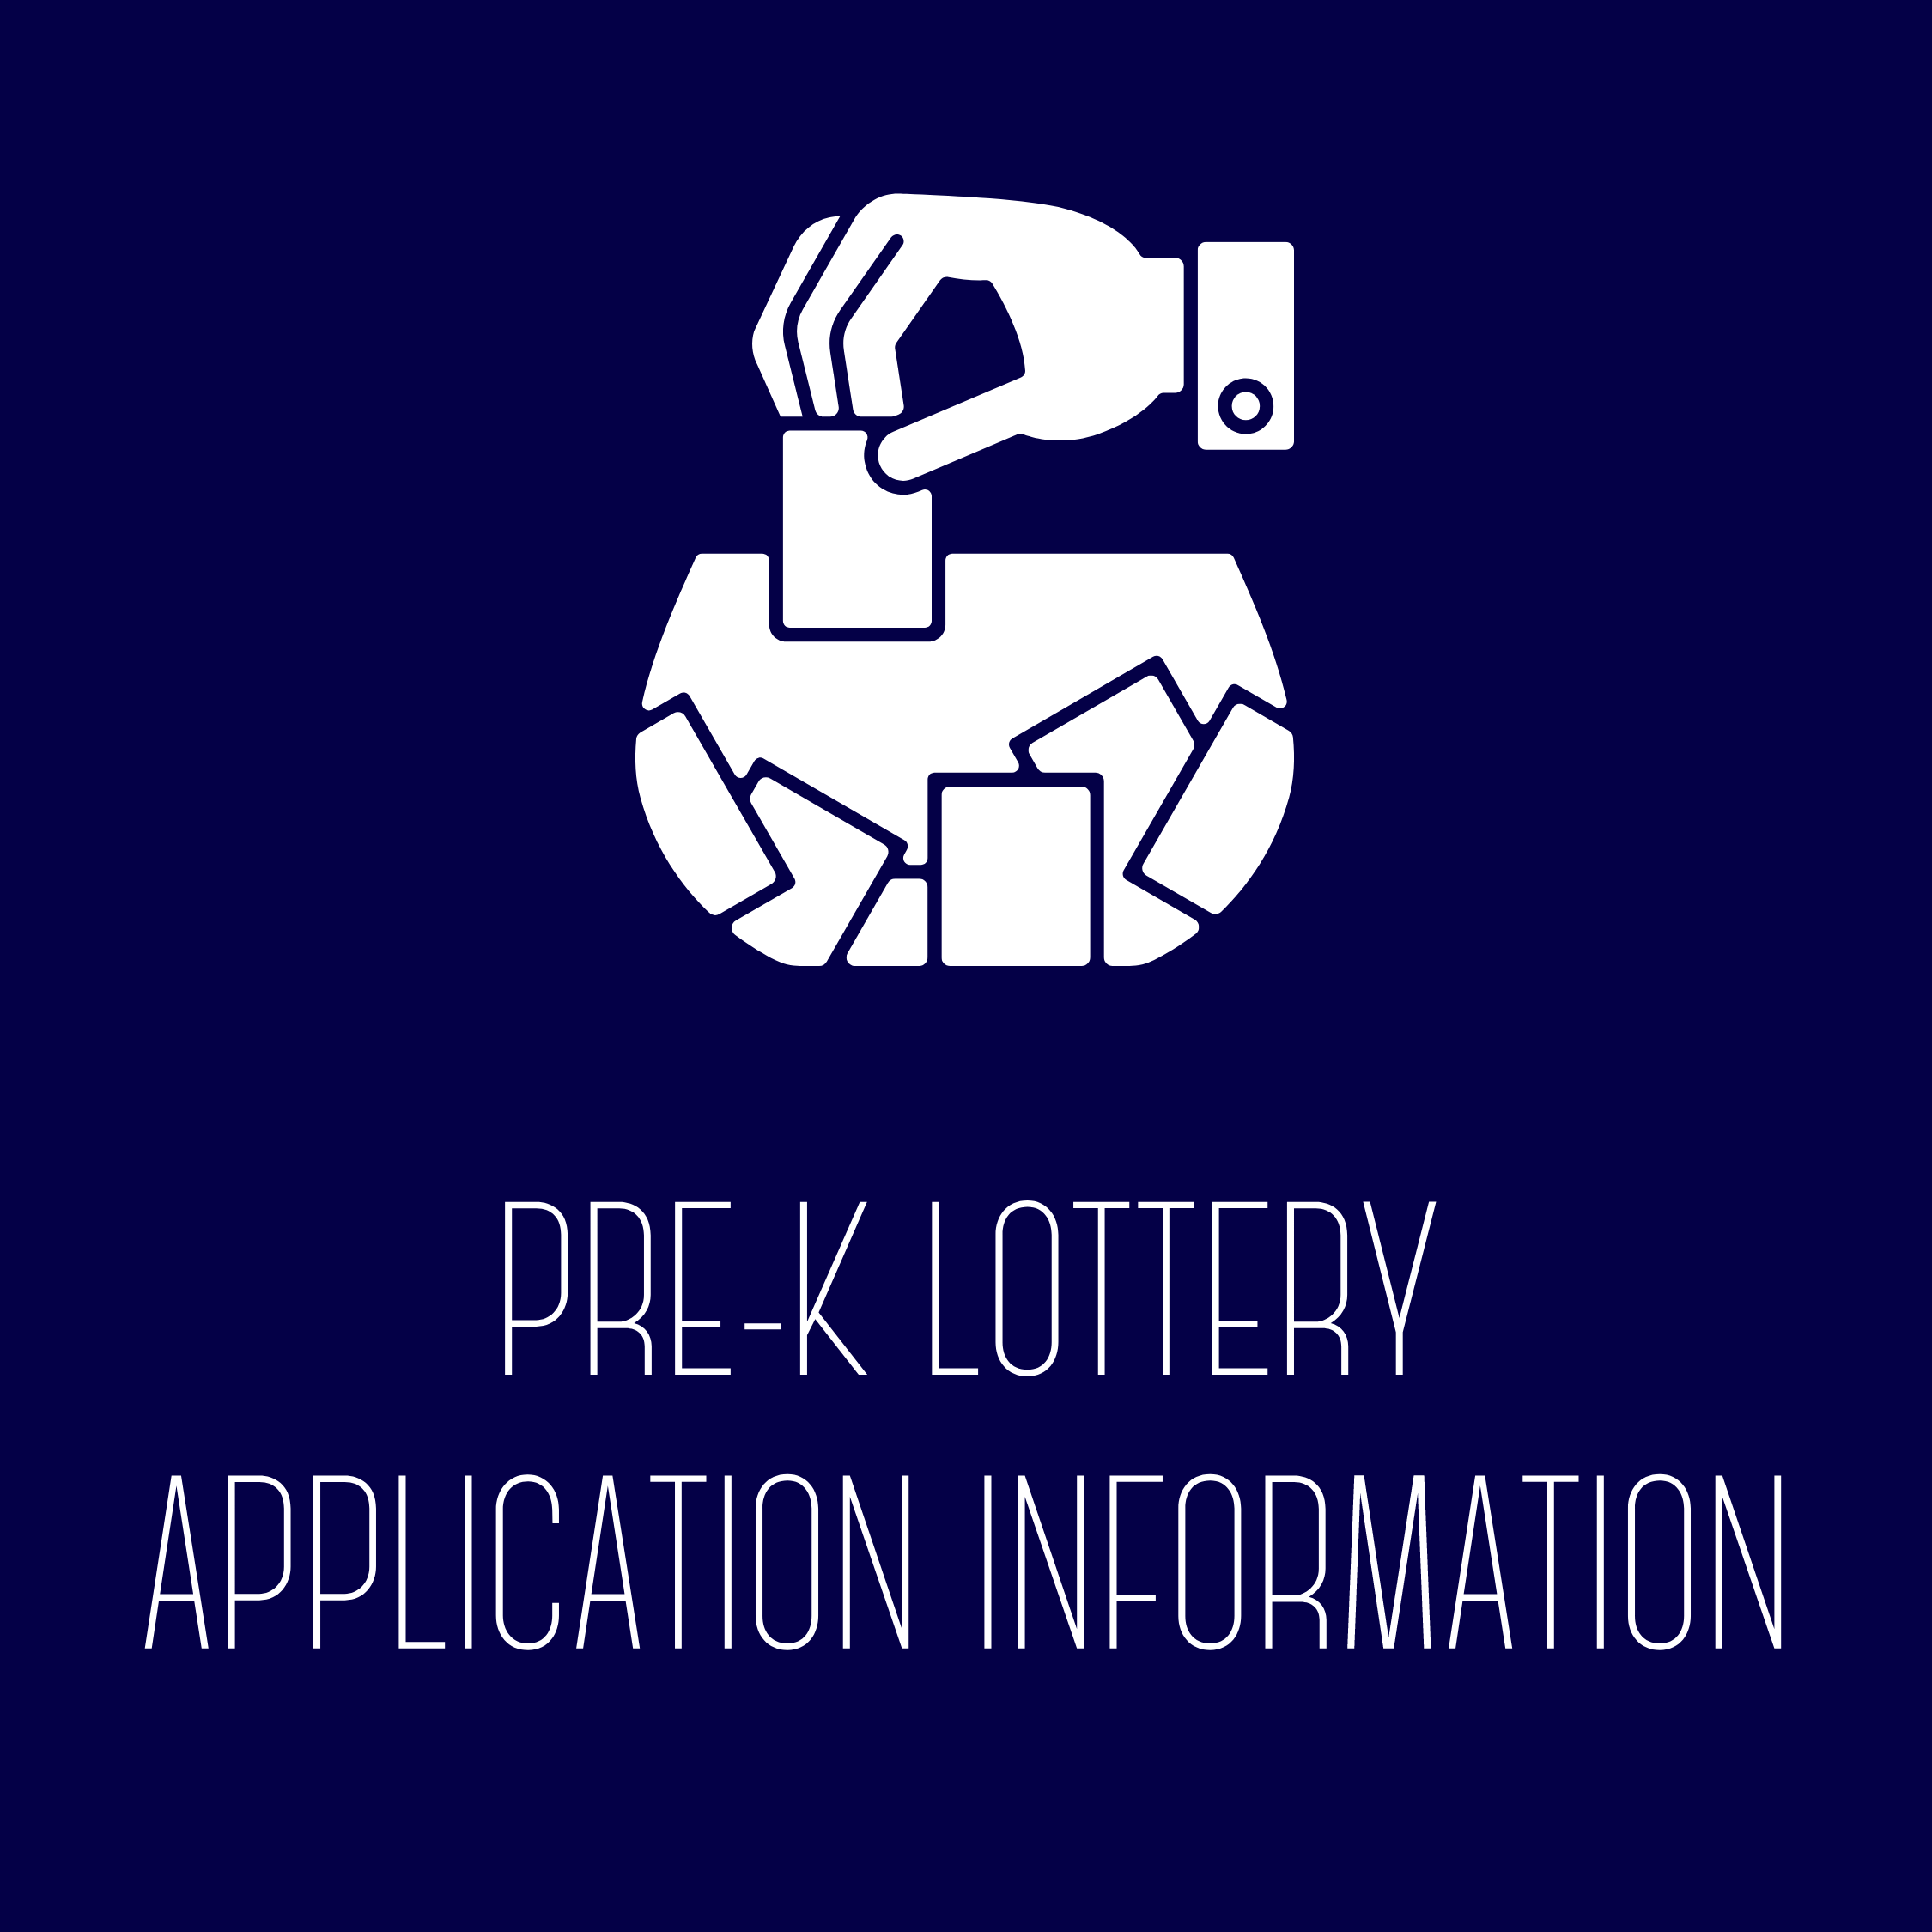 Pre-K Lottery Application Information